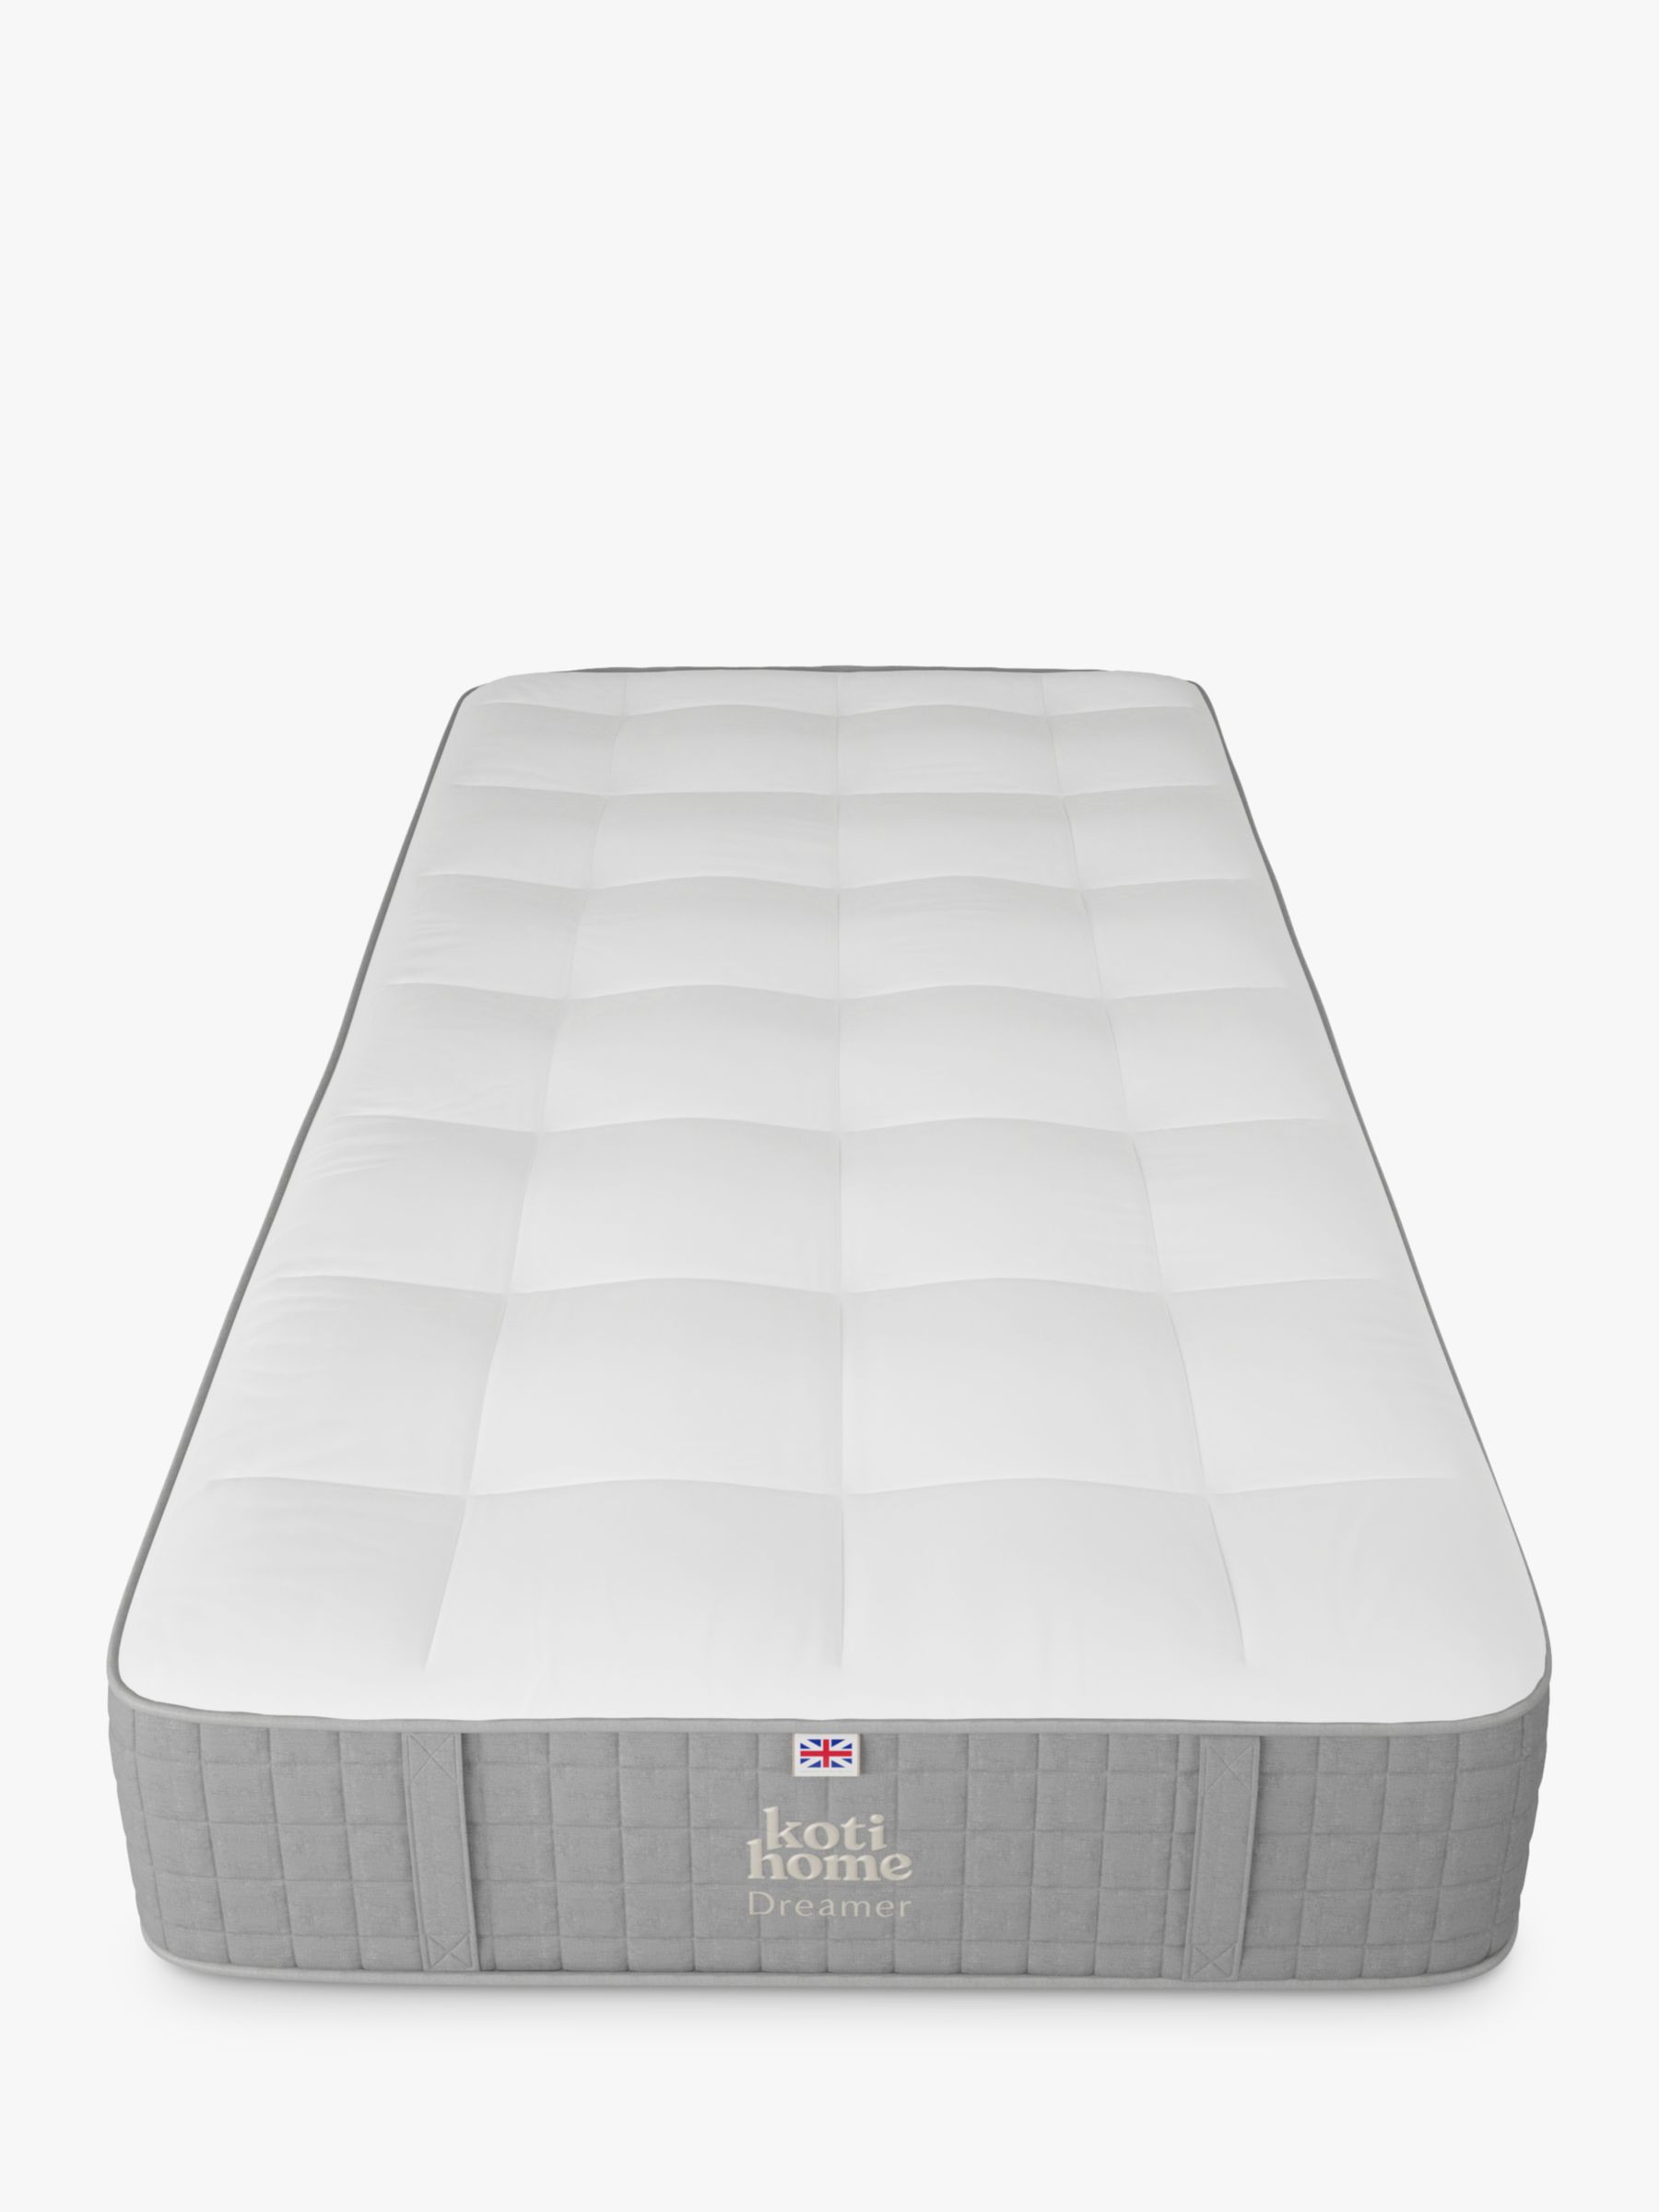 Photo of Koti home dreamer pocket spring mattress medium/firm support single